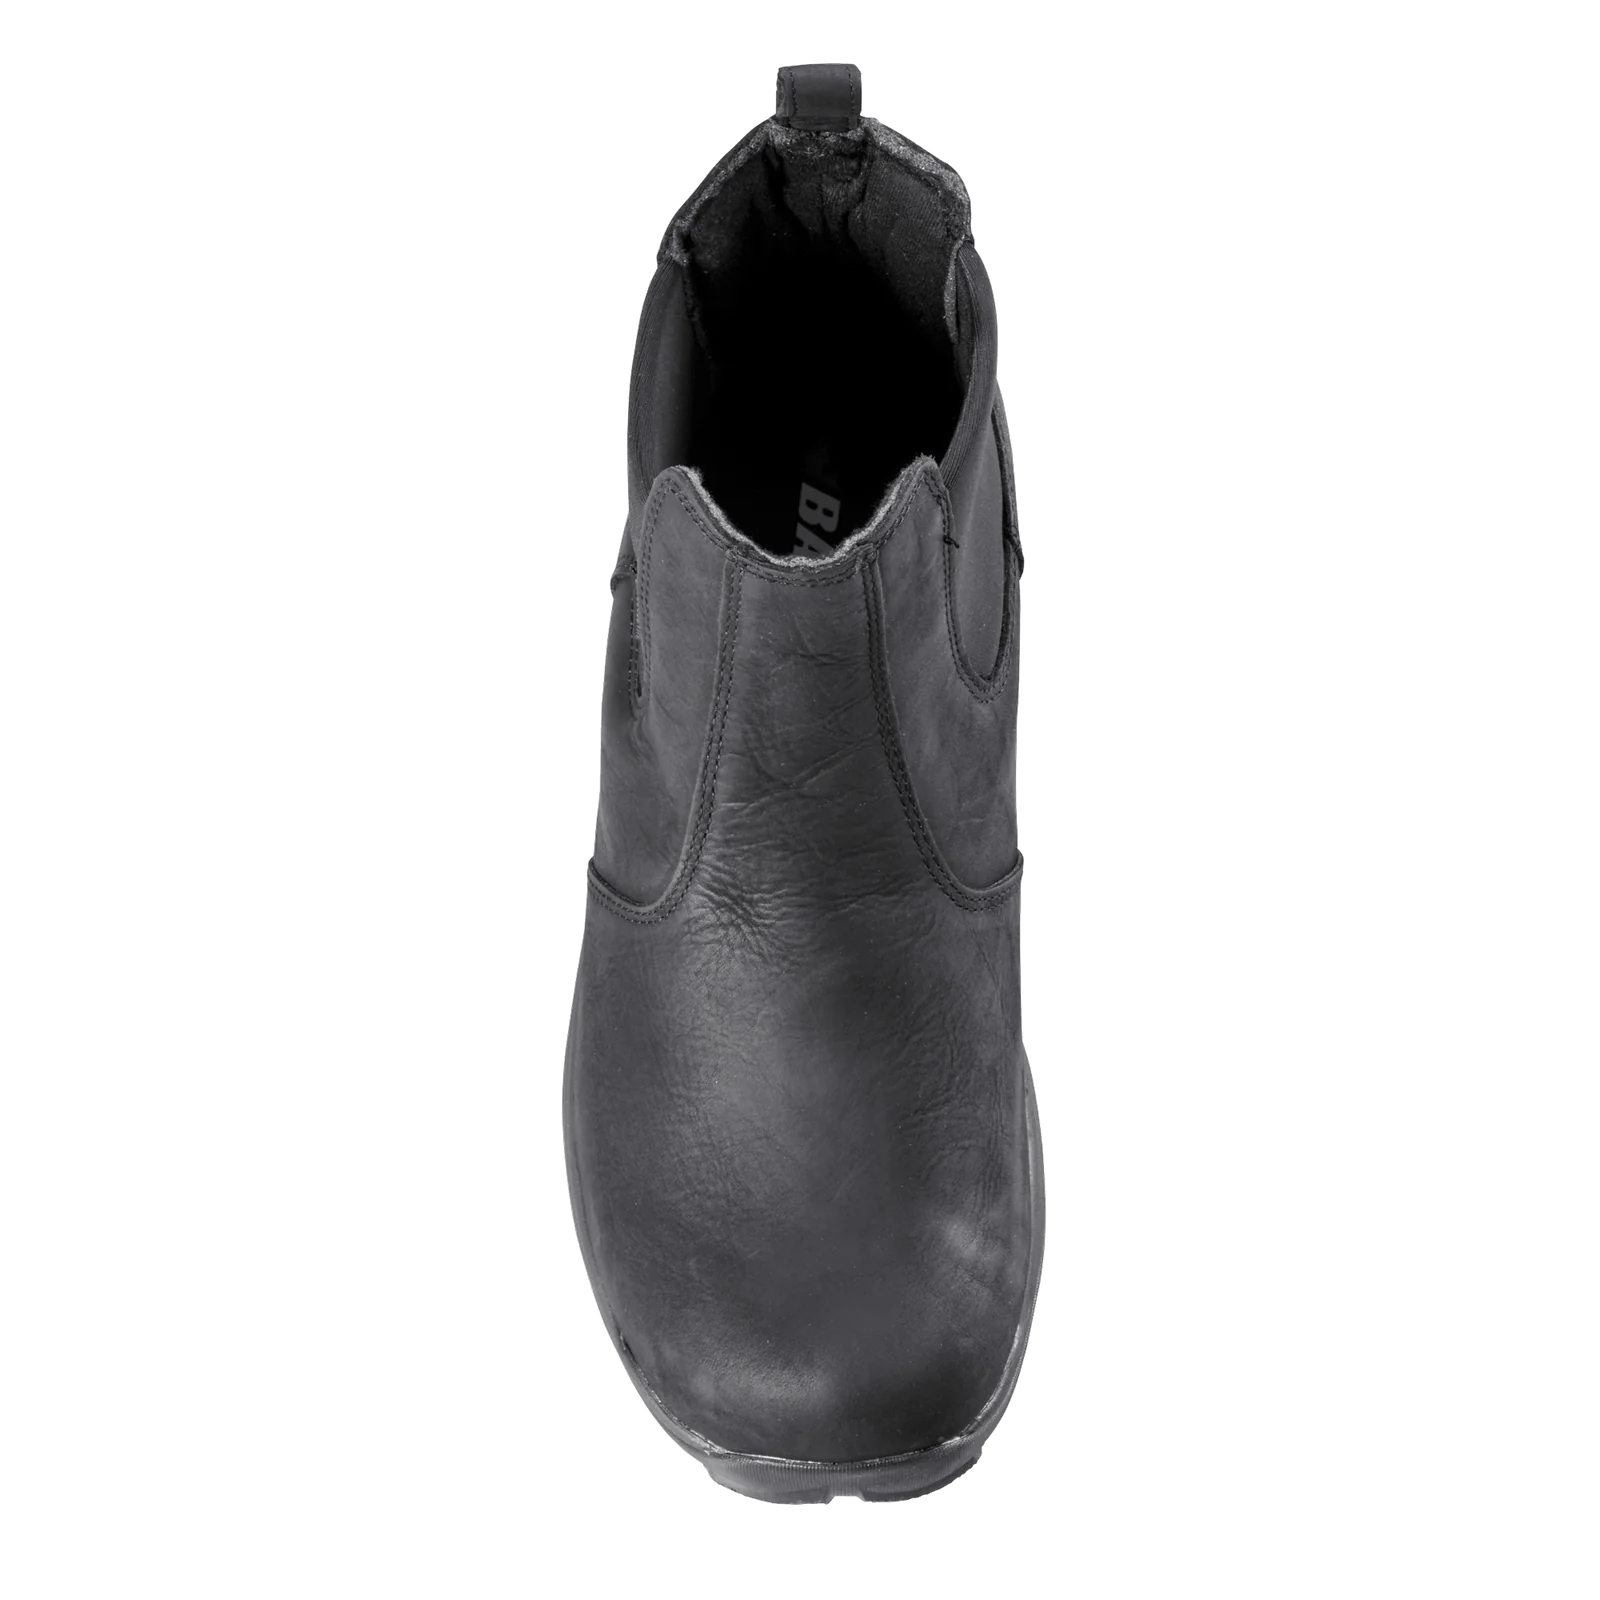 Baffin Copenhagen Boot Black - FULLSEND SKI AND OUTDOOR